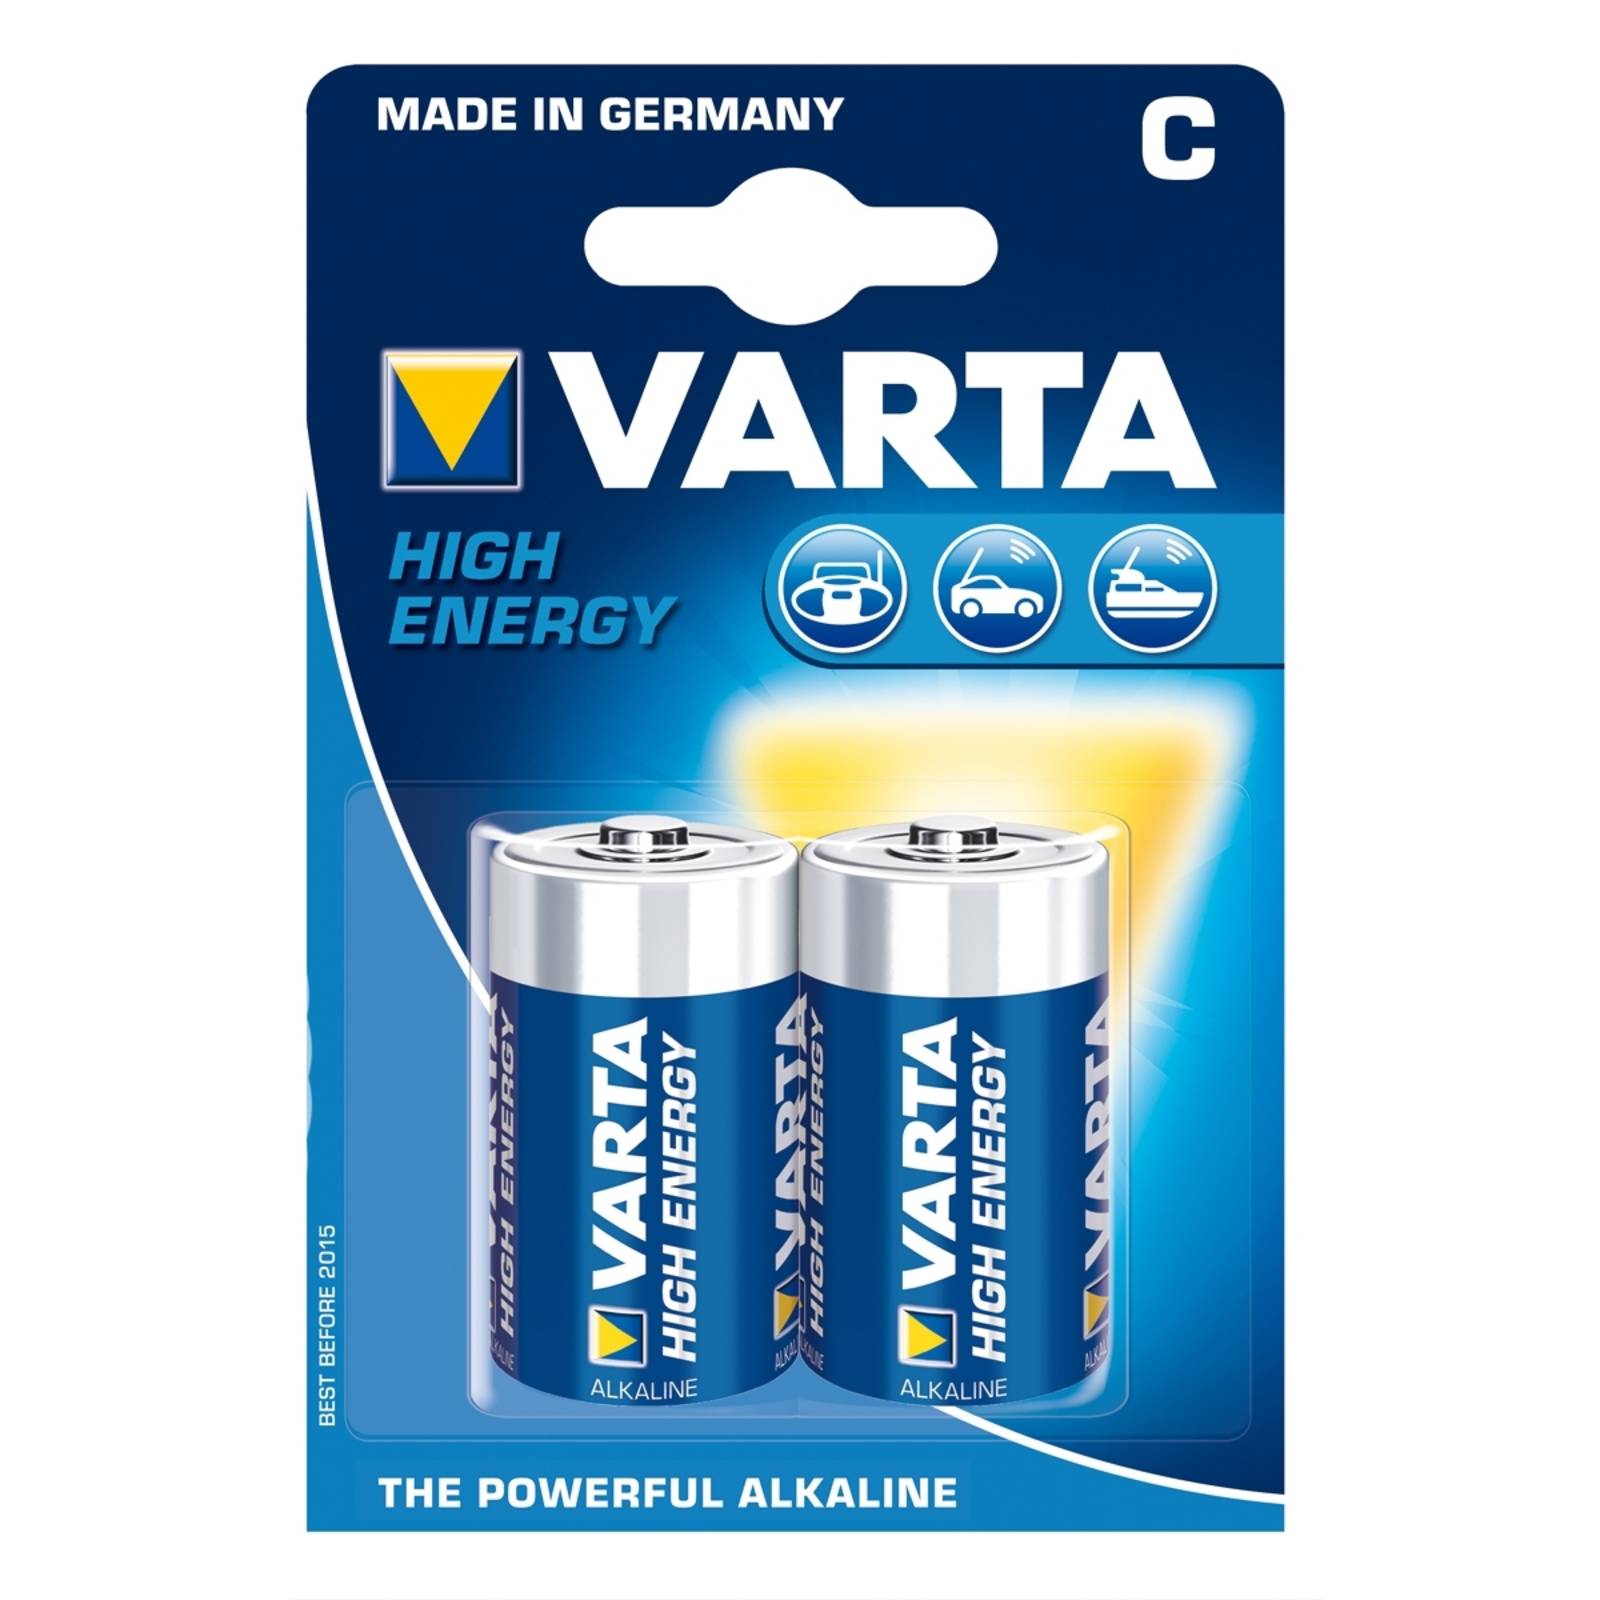 VARTA High Energy Batterien Baby 4914 - C von Varta